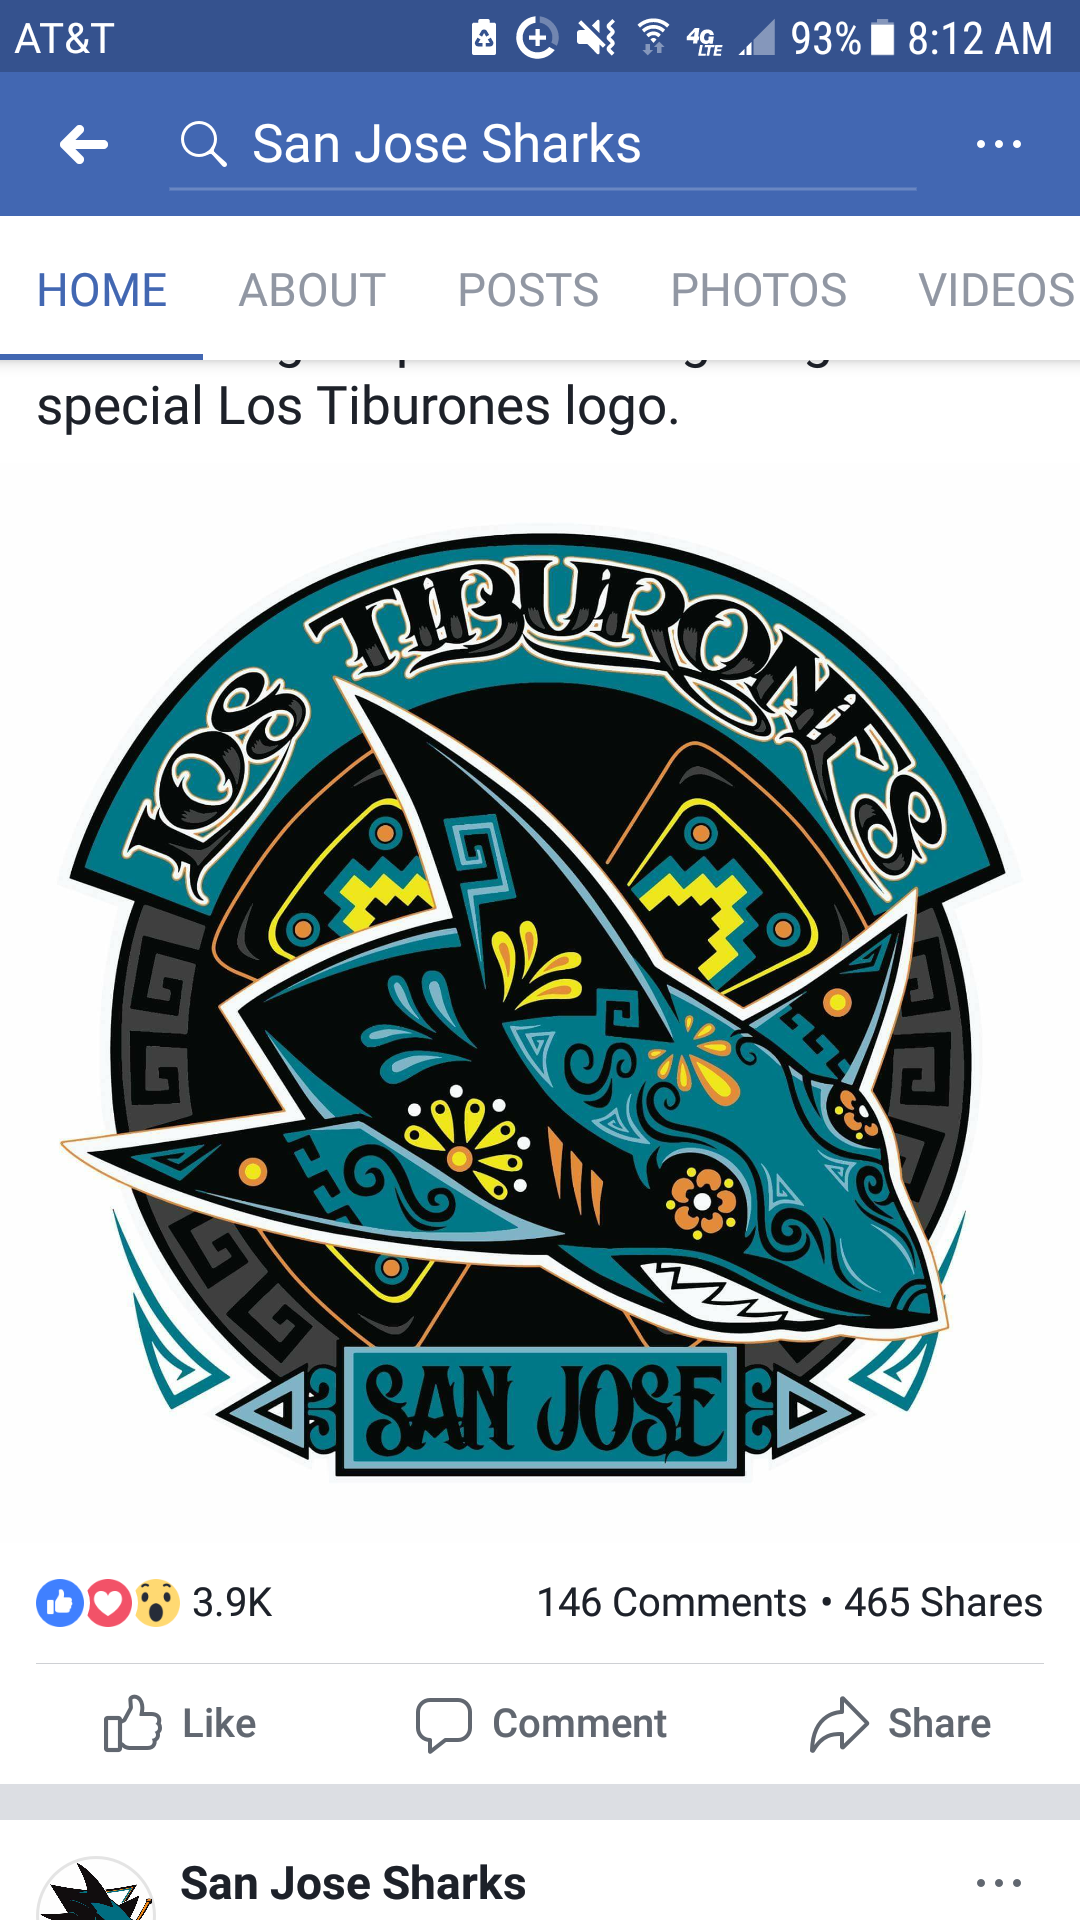 San Jose Sharks - This year's Los Tiburones jersey